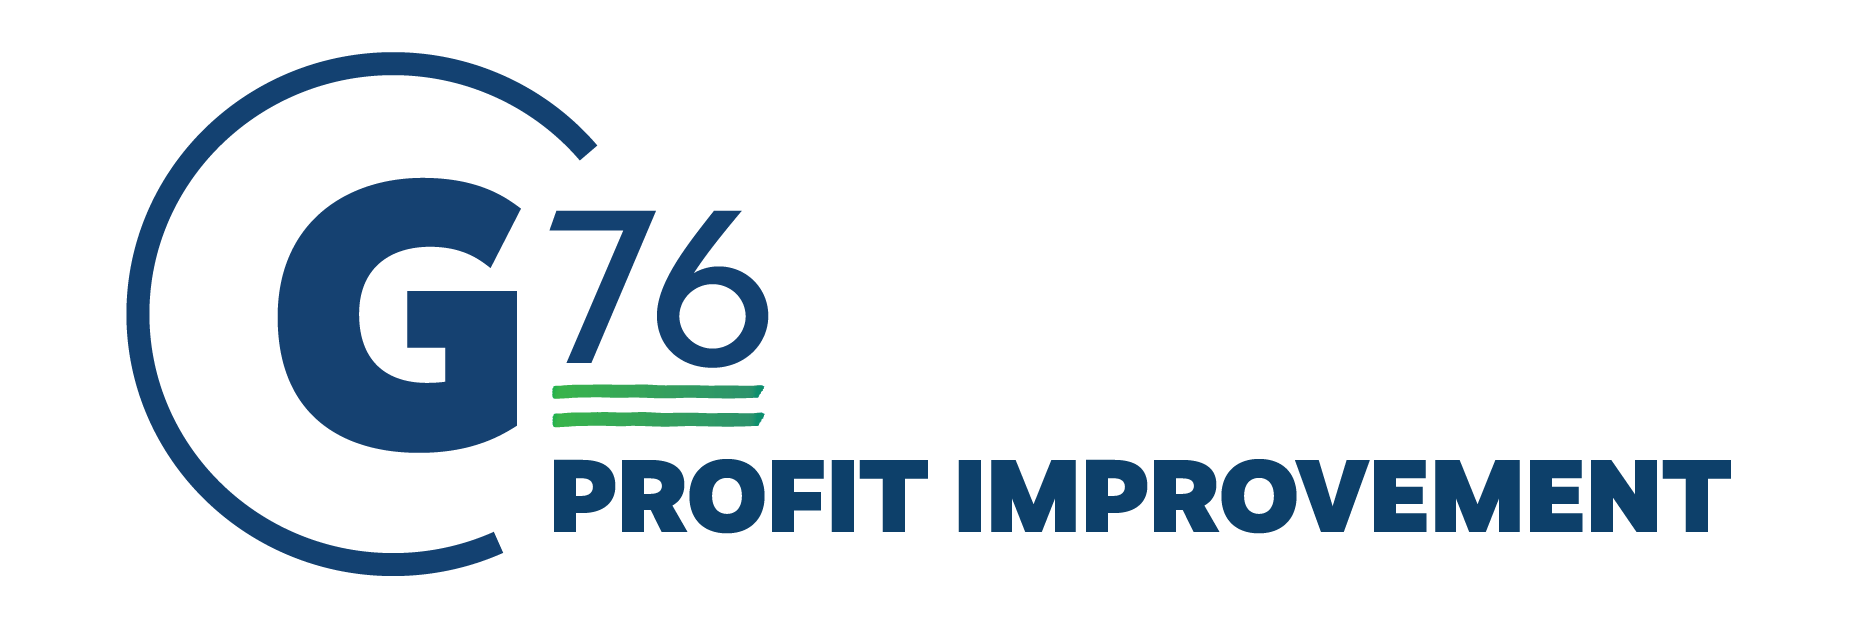 G76 Profit Improvement